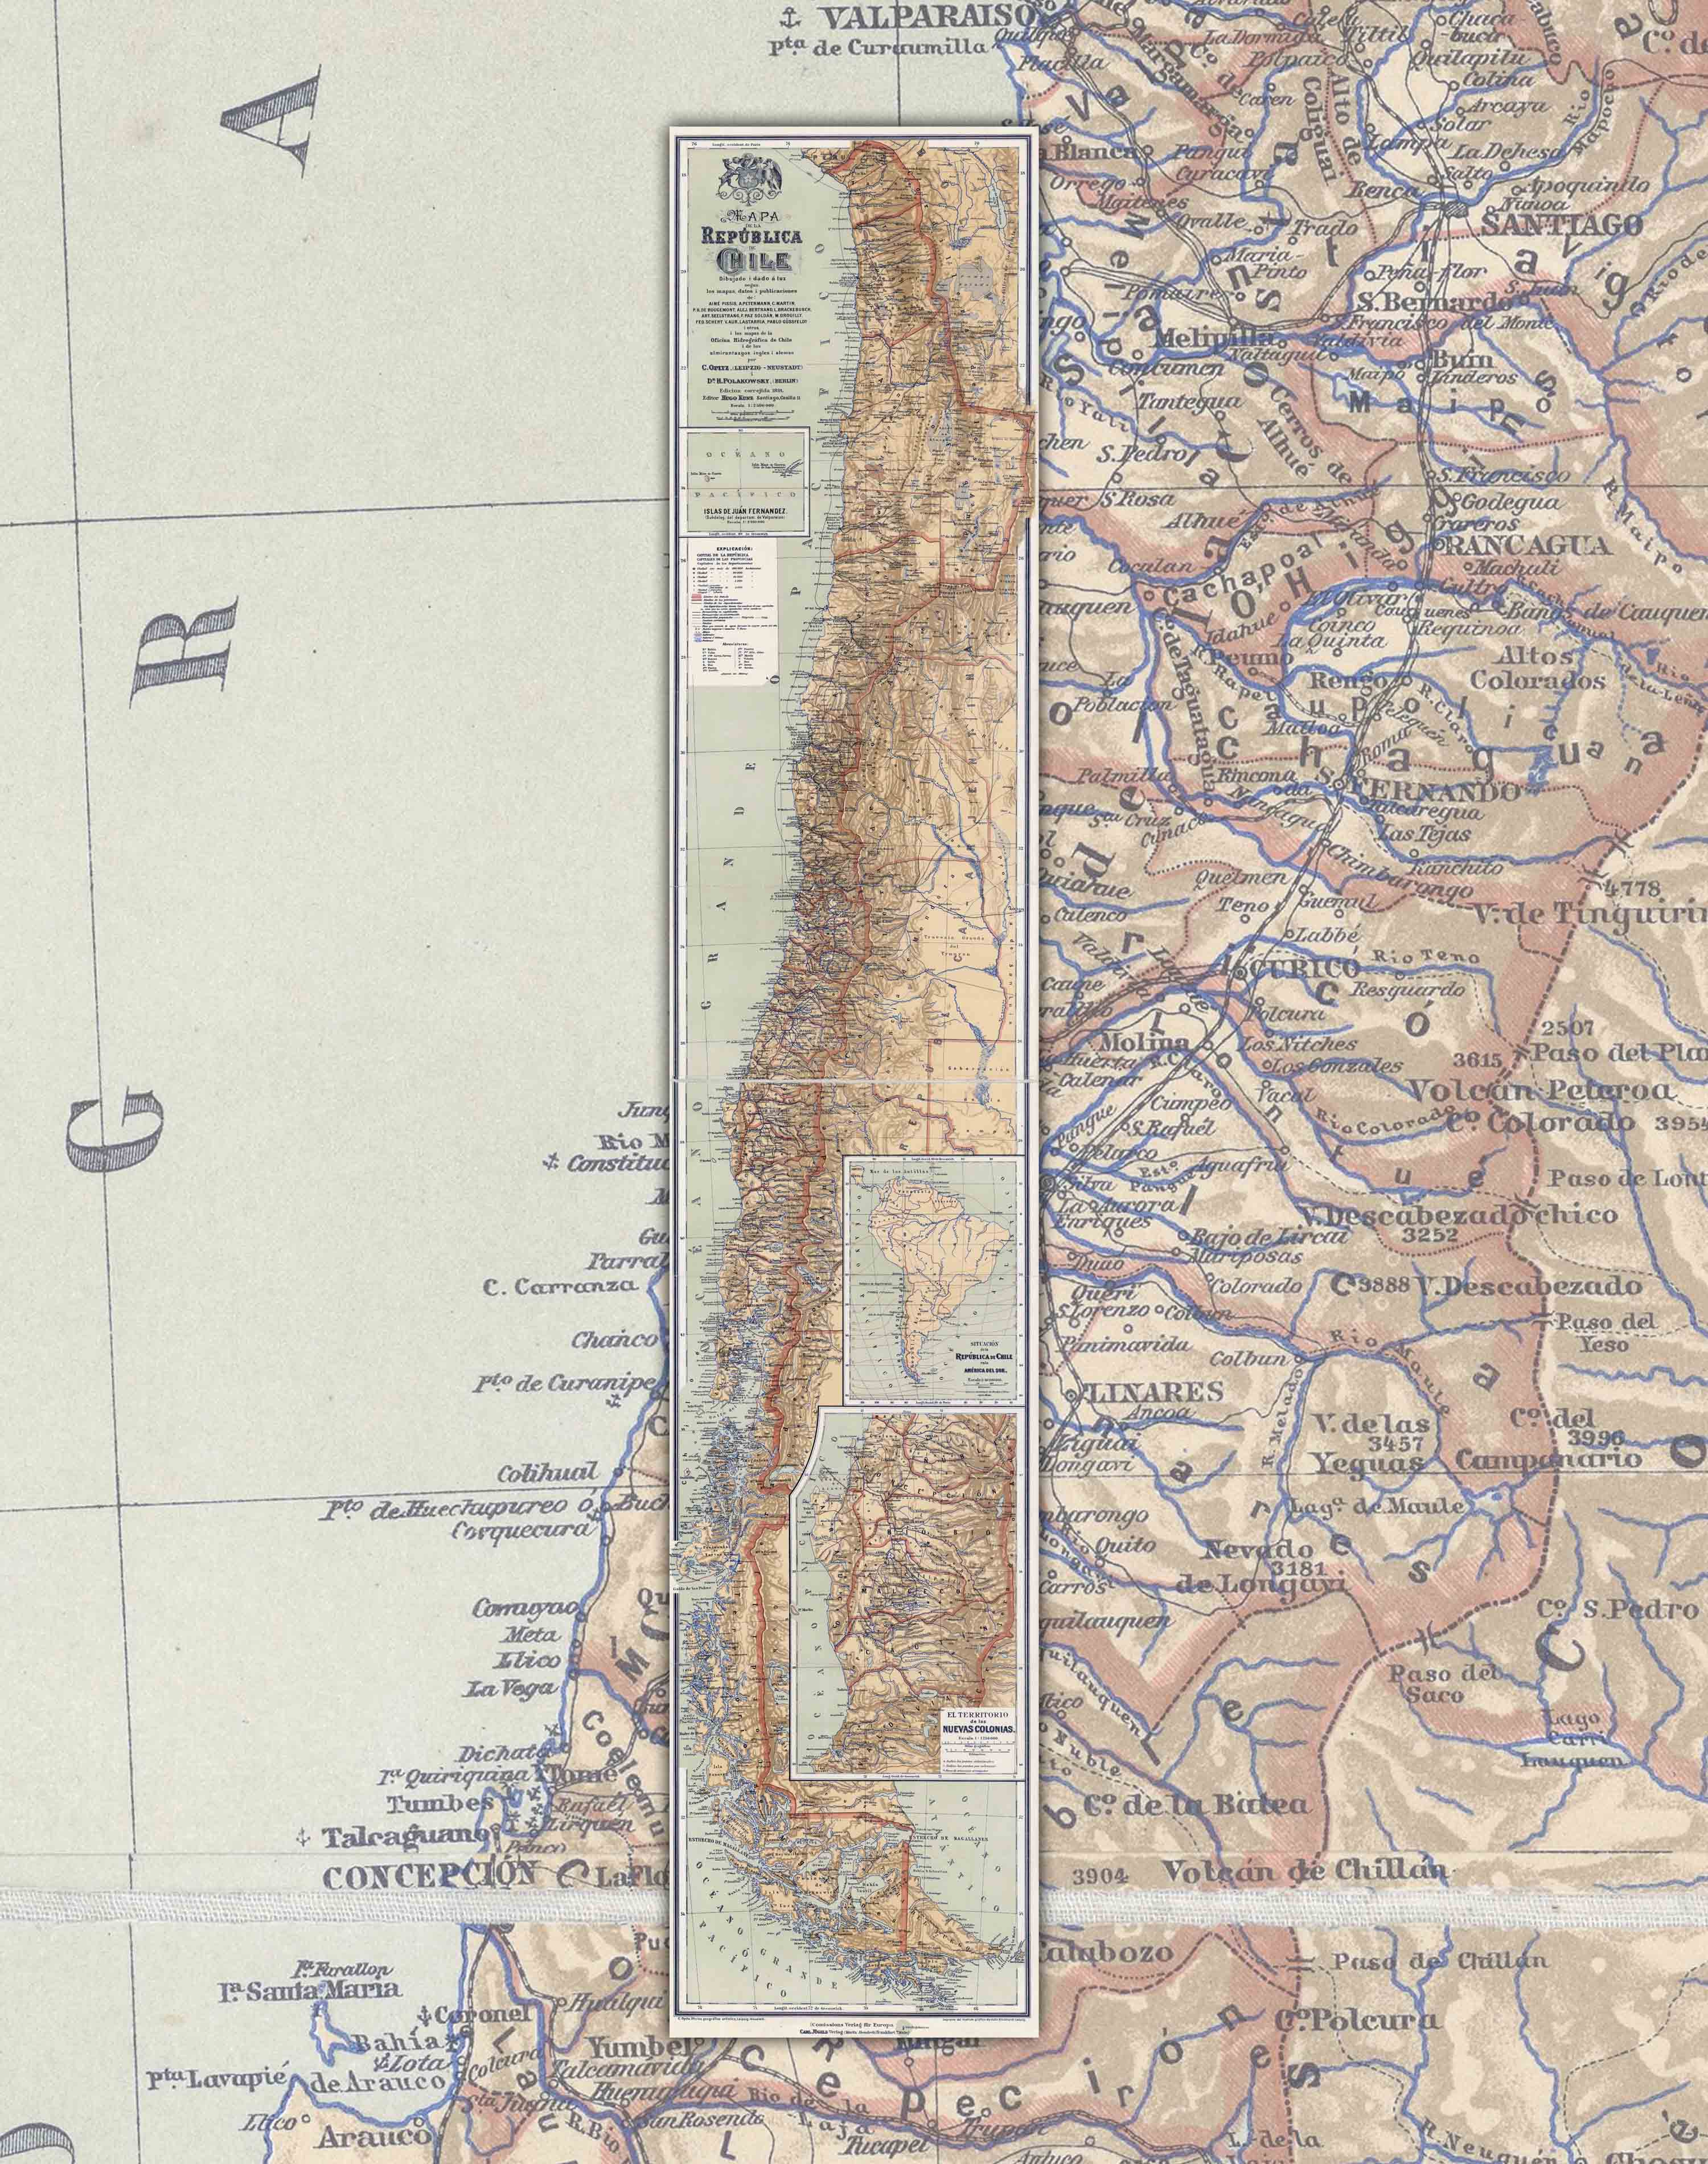 Mapa de Chile en 1891 - Lámina